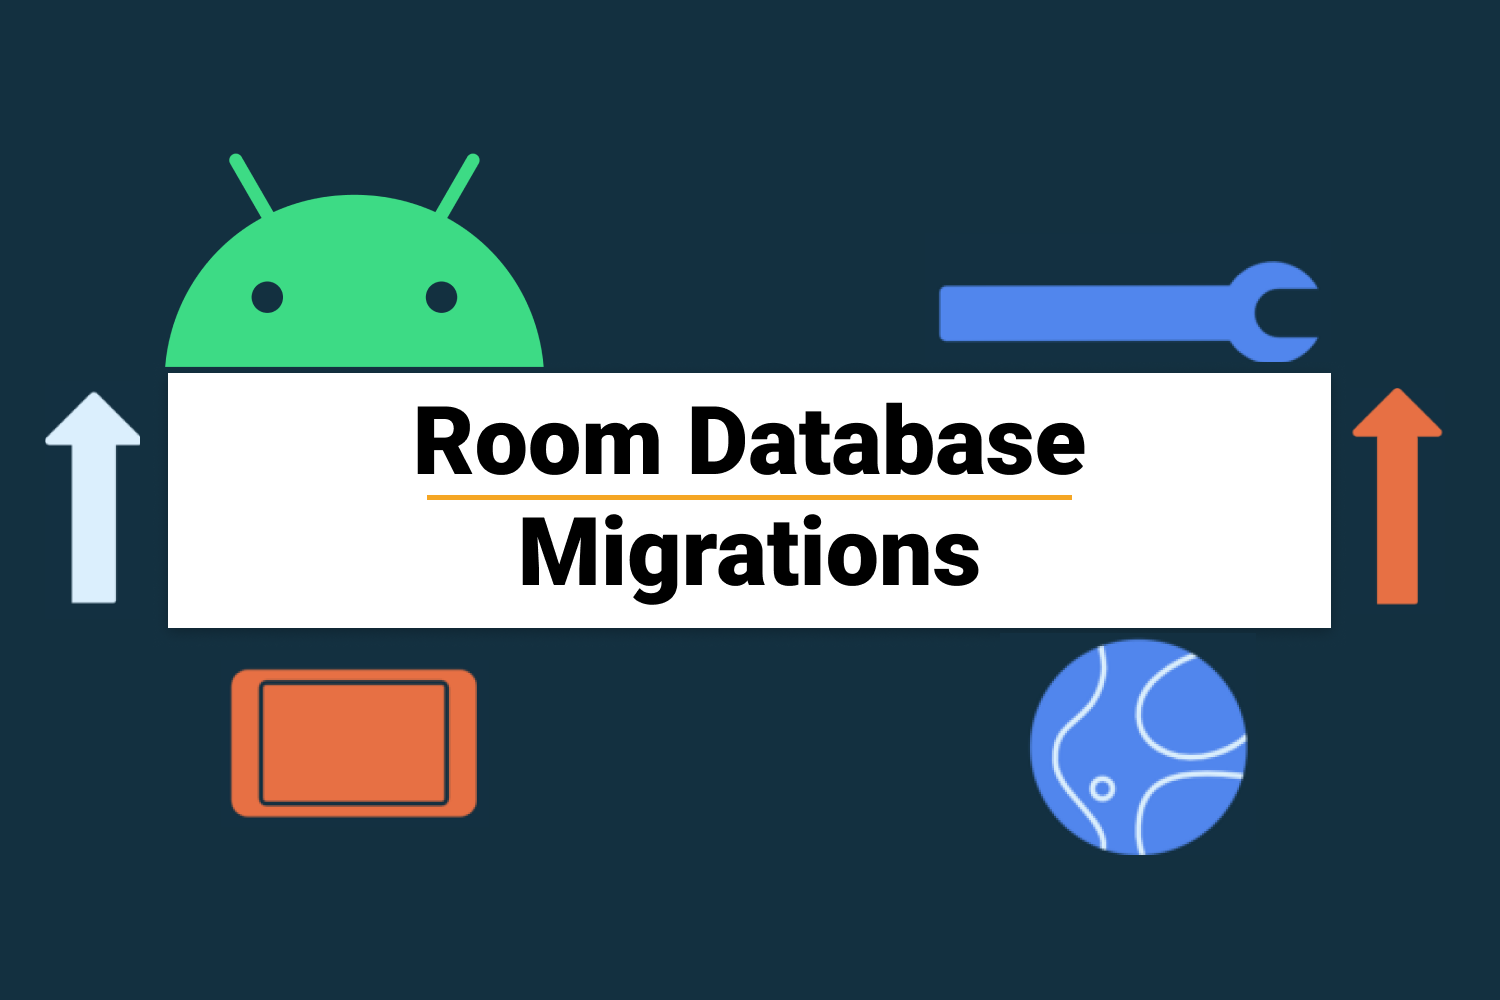 Room Database Migrations